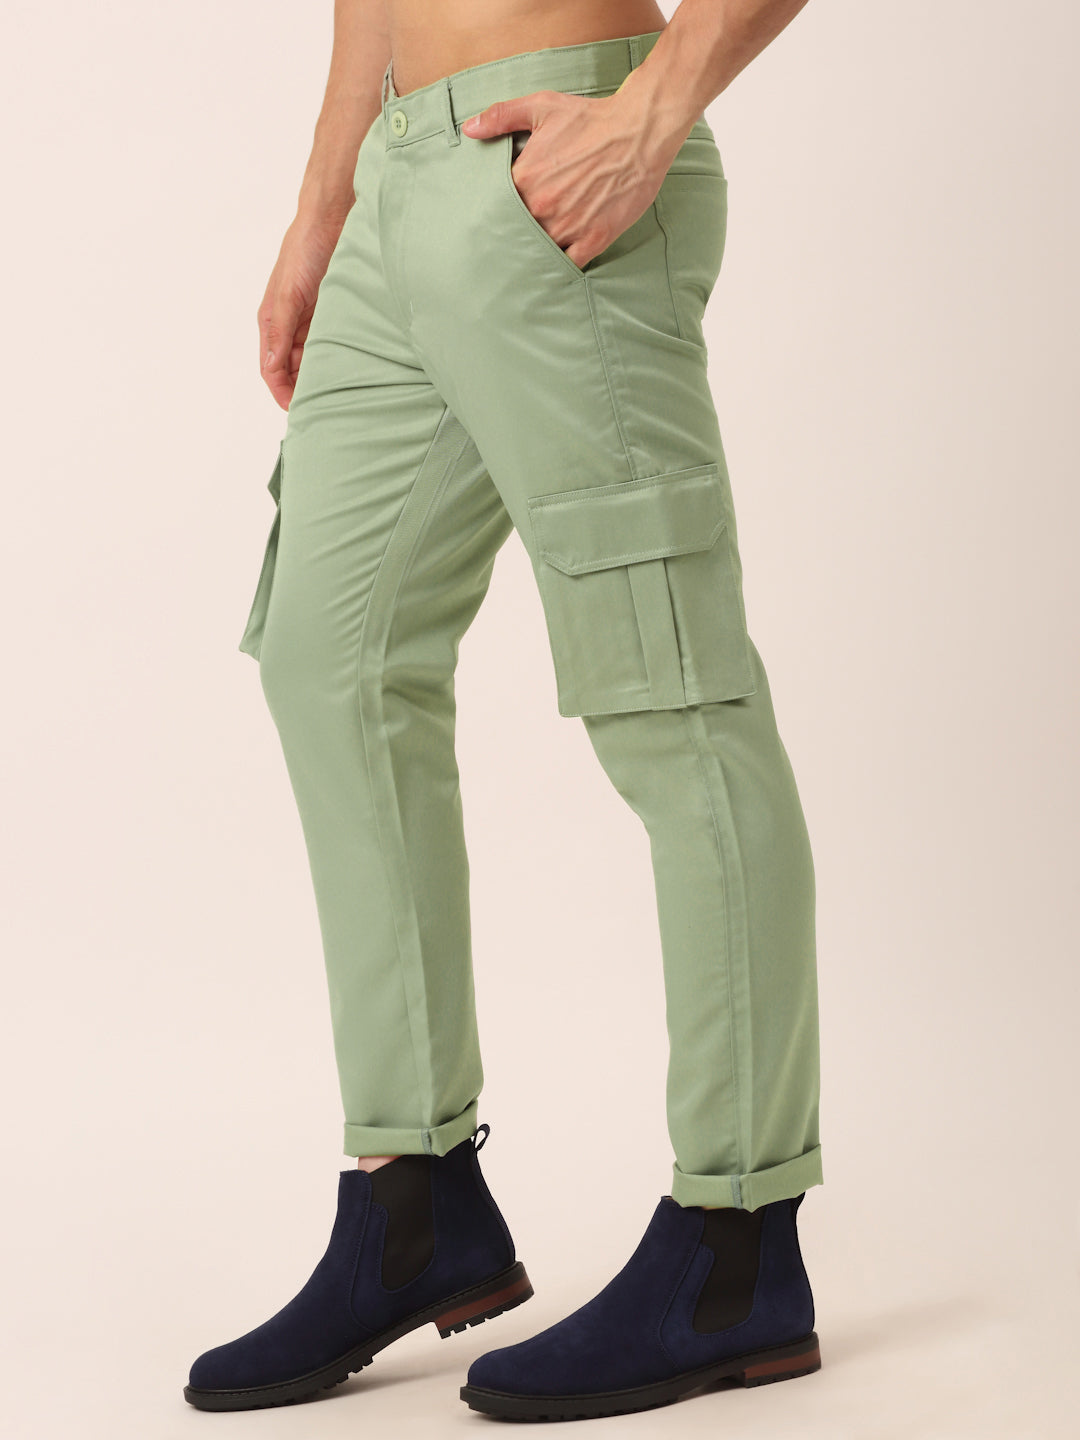 Stand Out Pants - Pista Green Soft Linen Solid Plain Pants